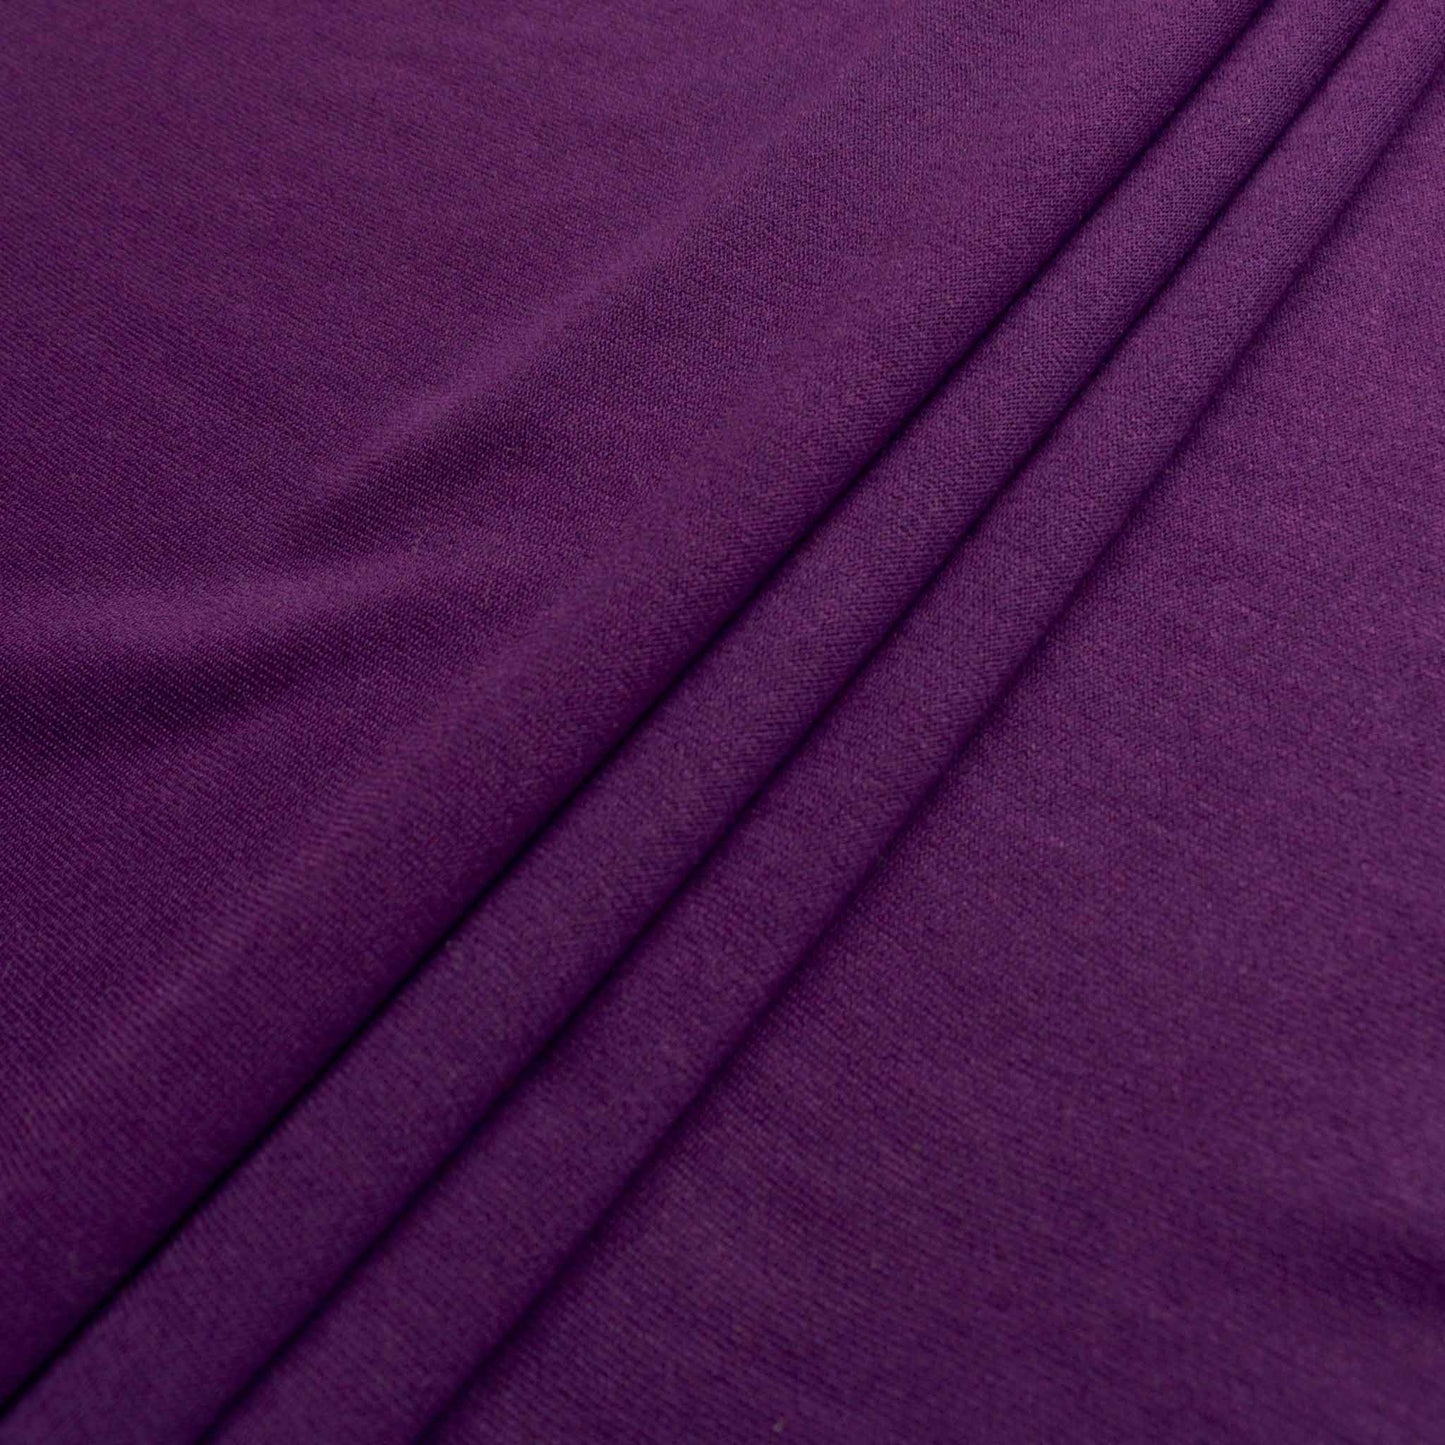 ponte roma jersey knit dress fabric in purple